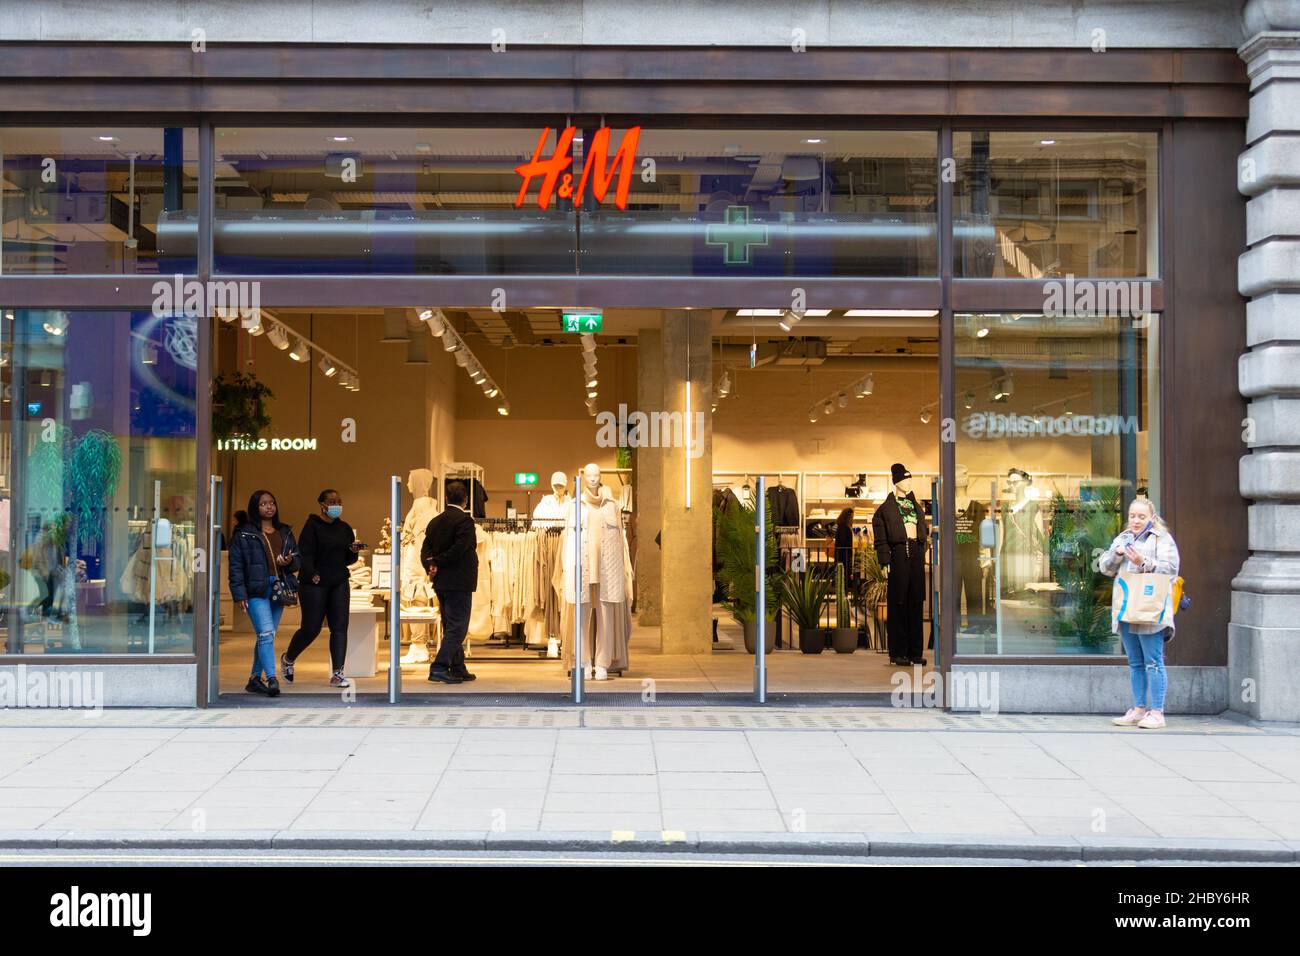 H&M Clothes Shop, Cambridge, England, UK Stock Photo - Alamy